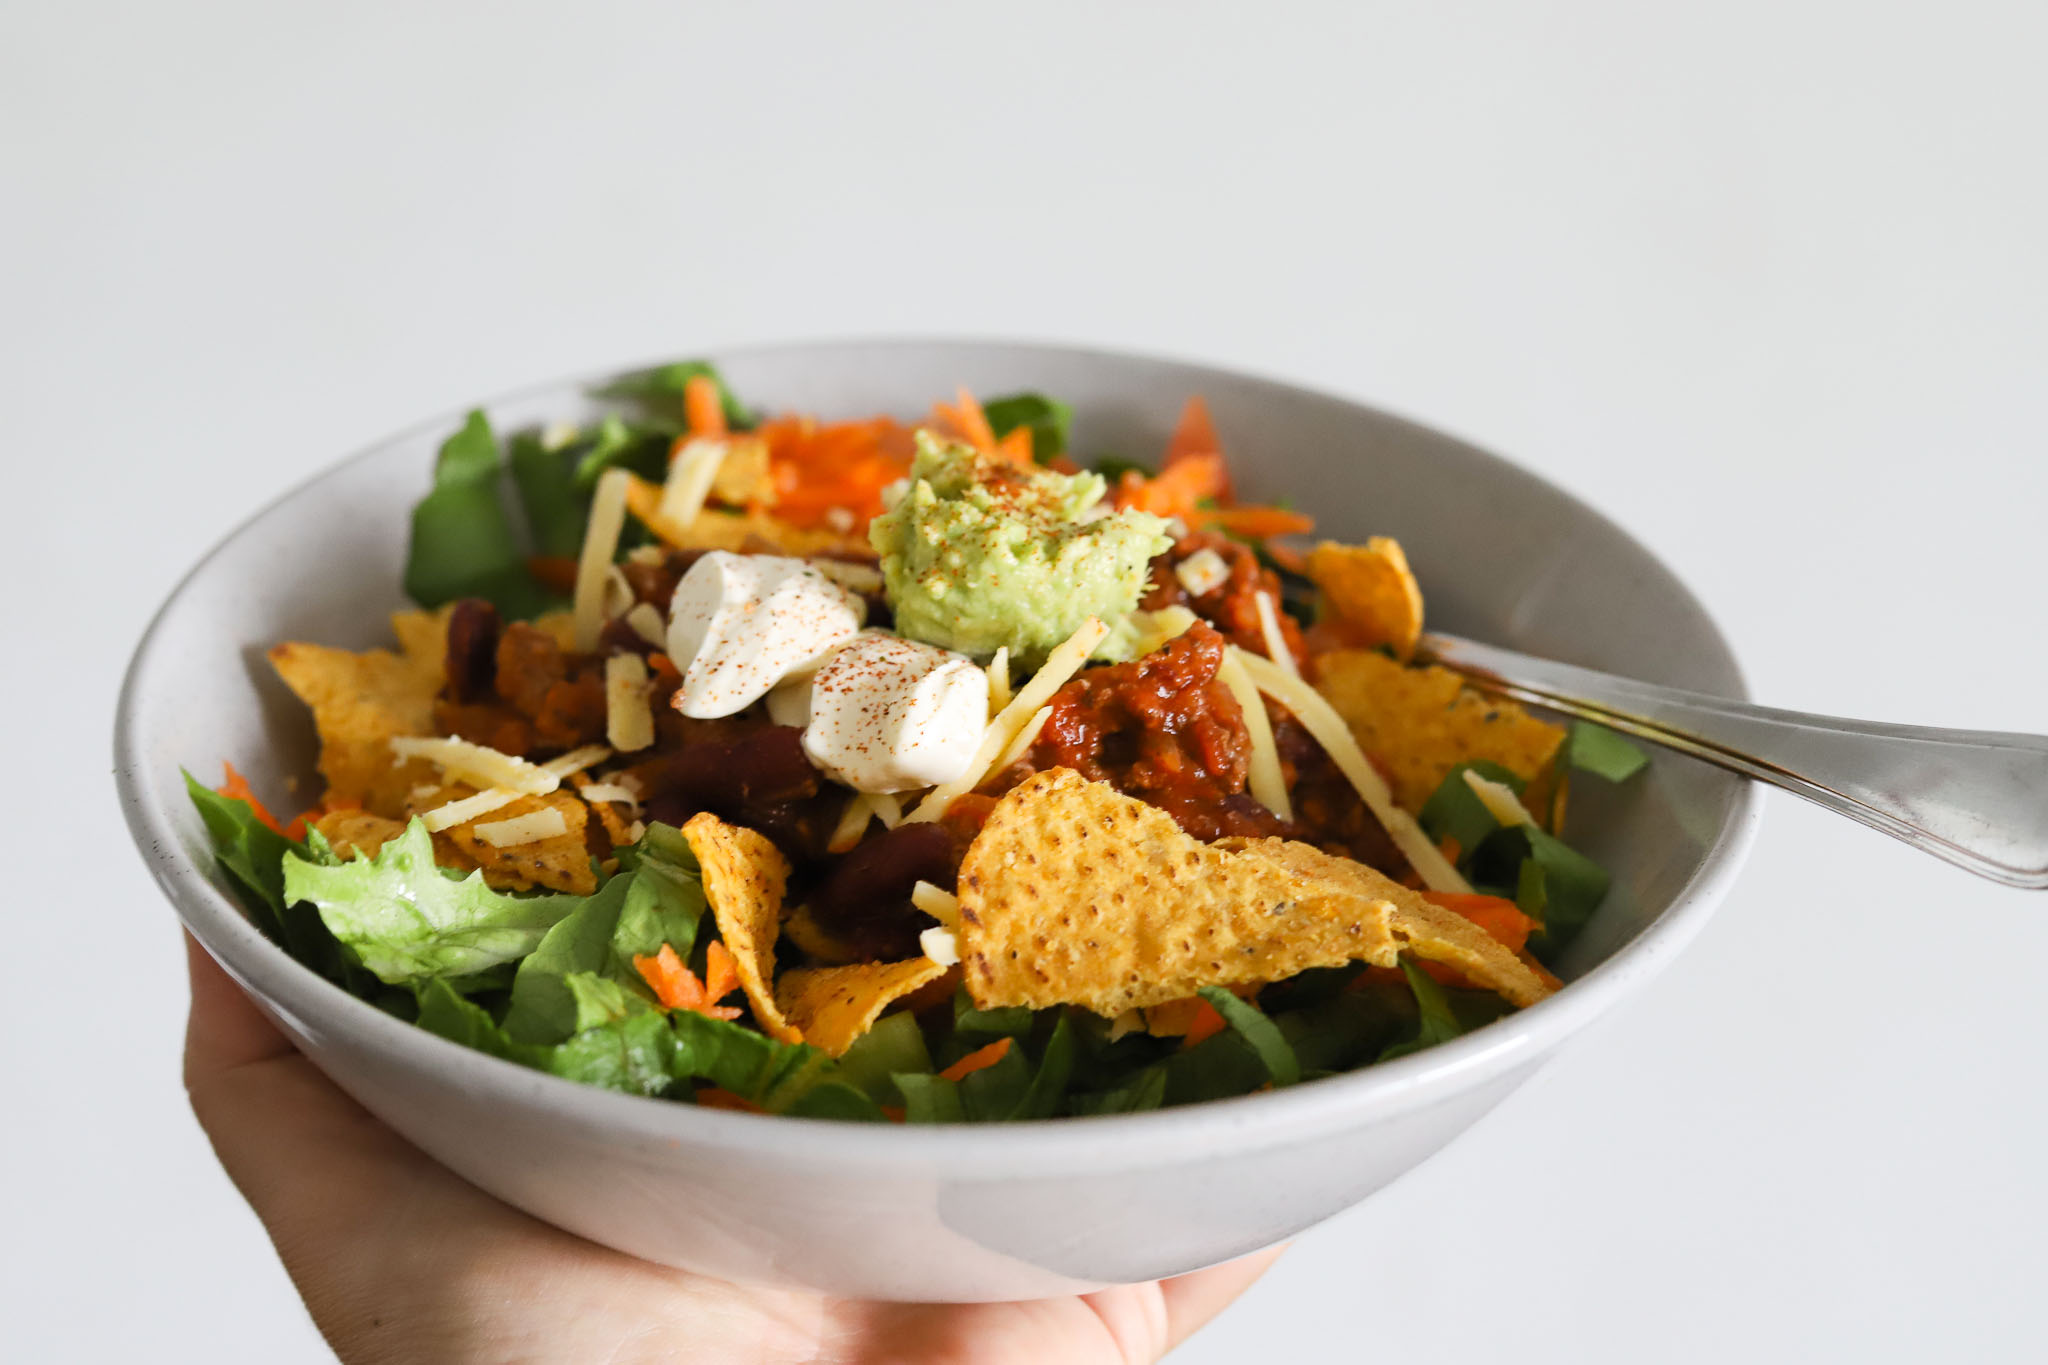 Taco Salad Recipe | The Style Aesthetic Lifestyle Blog